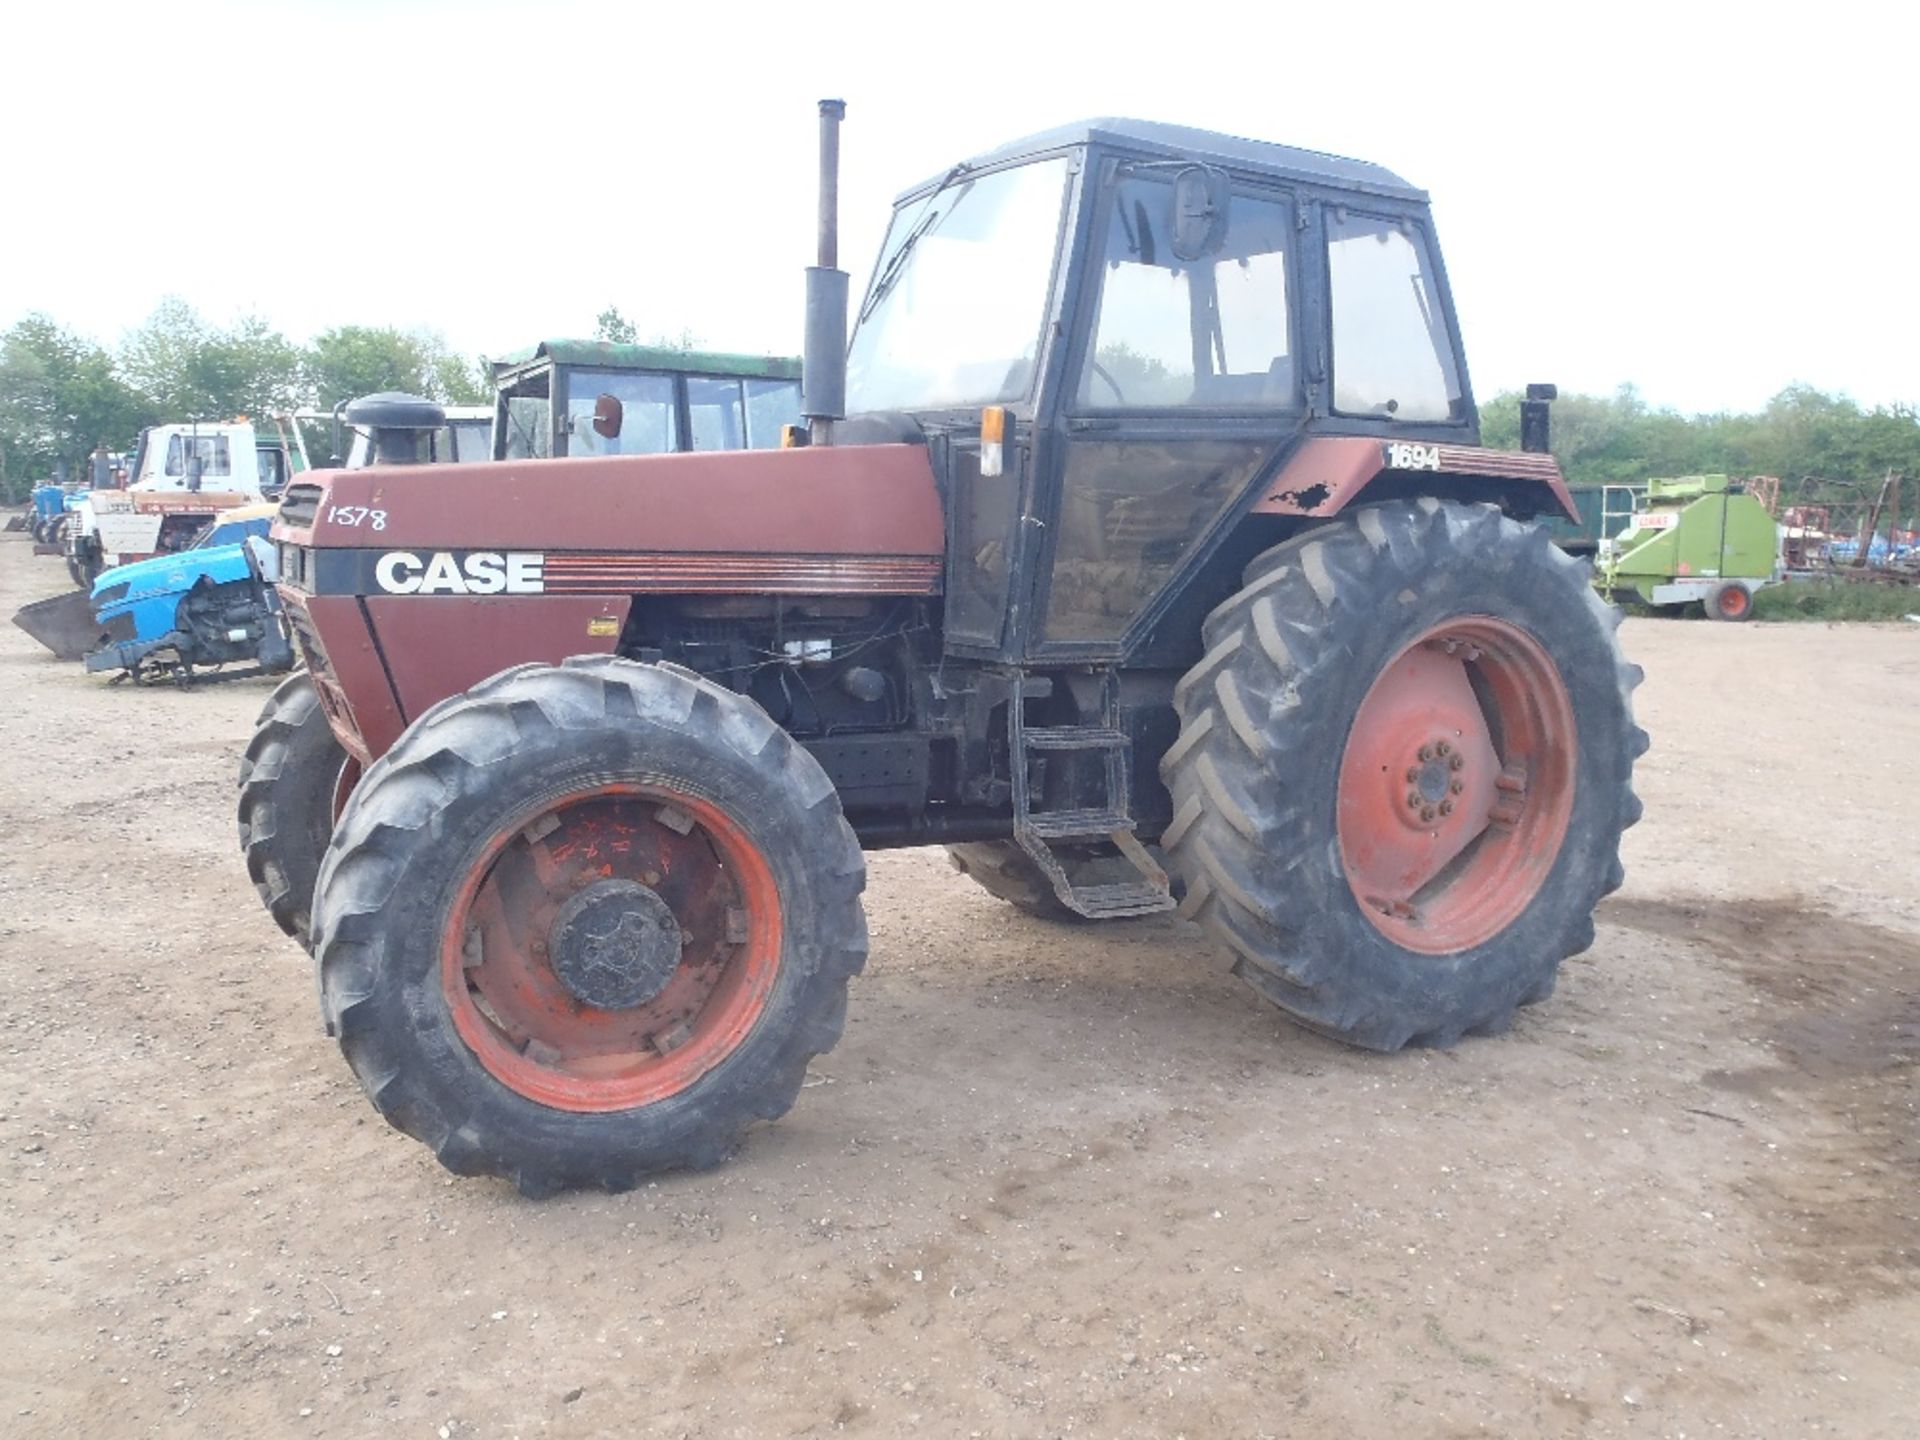 Case International 1055 4wd Tractor c/w 16.9 R38 & 12.4 R28 Reg No XAT 829X - Image 2 of 8